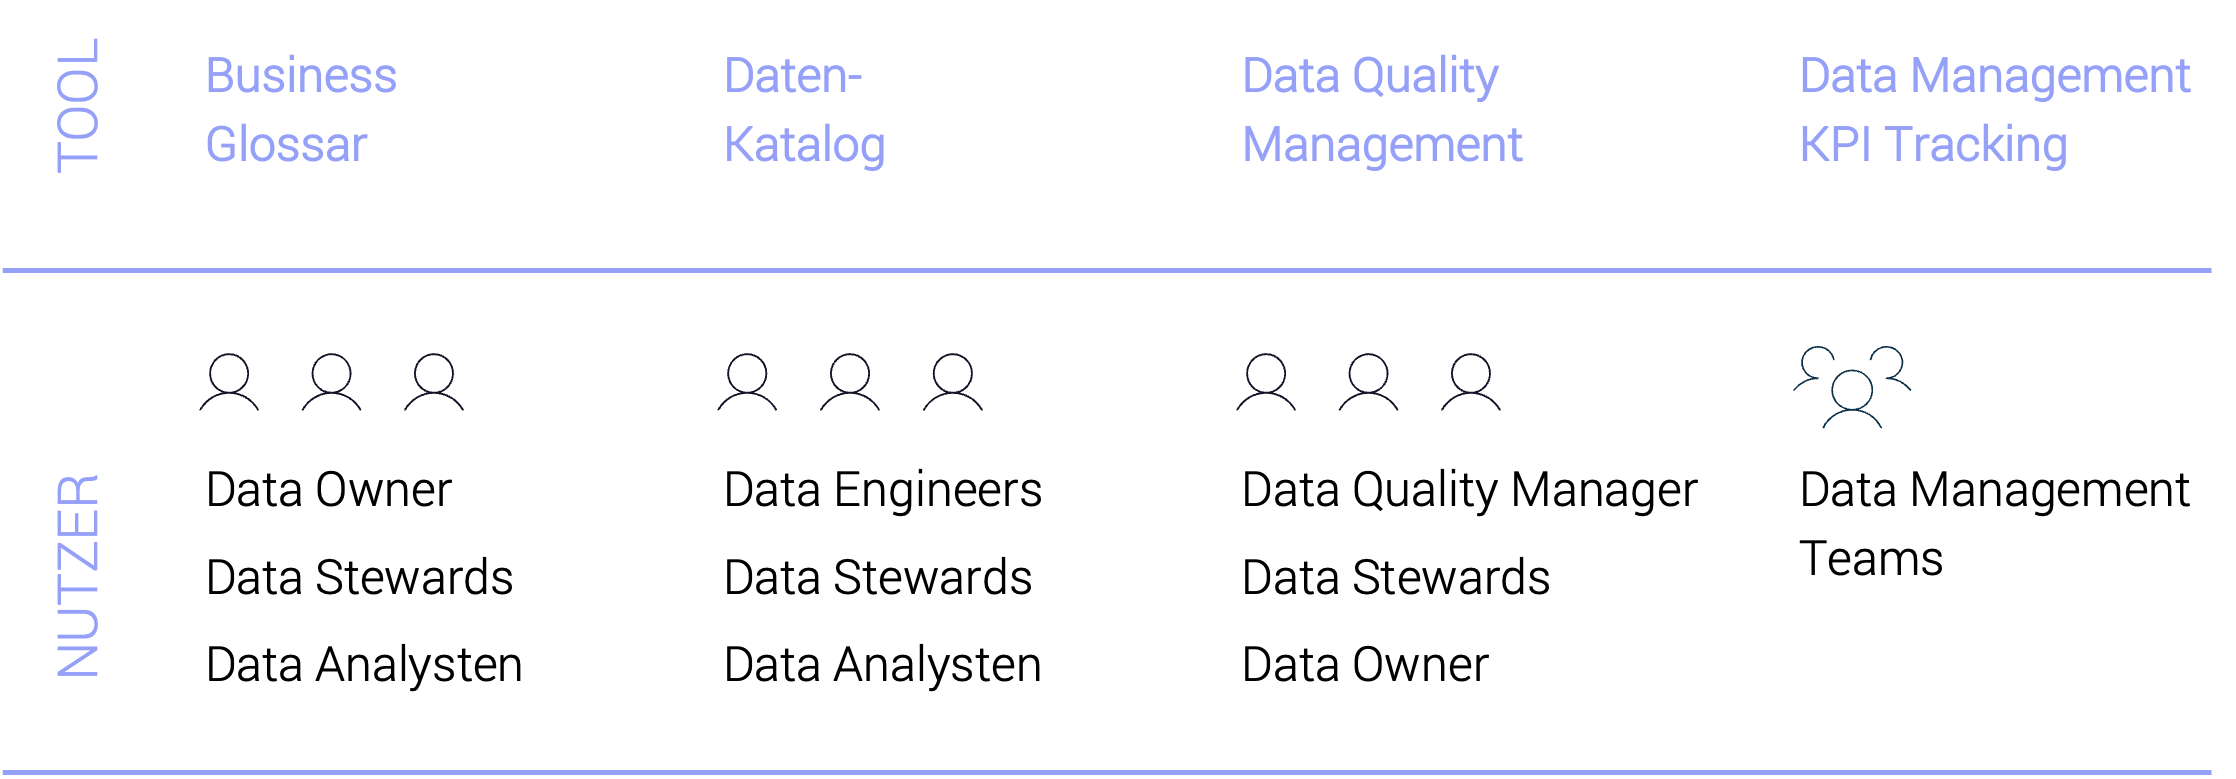 Datenmanagement Tools, Business Glossar, Datenkatalog, Datenwörterbuch, Data Catalog, Data Dictionary